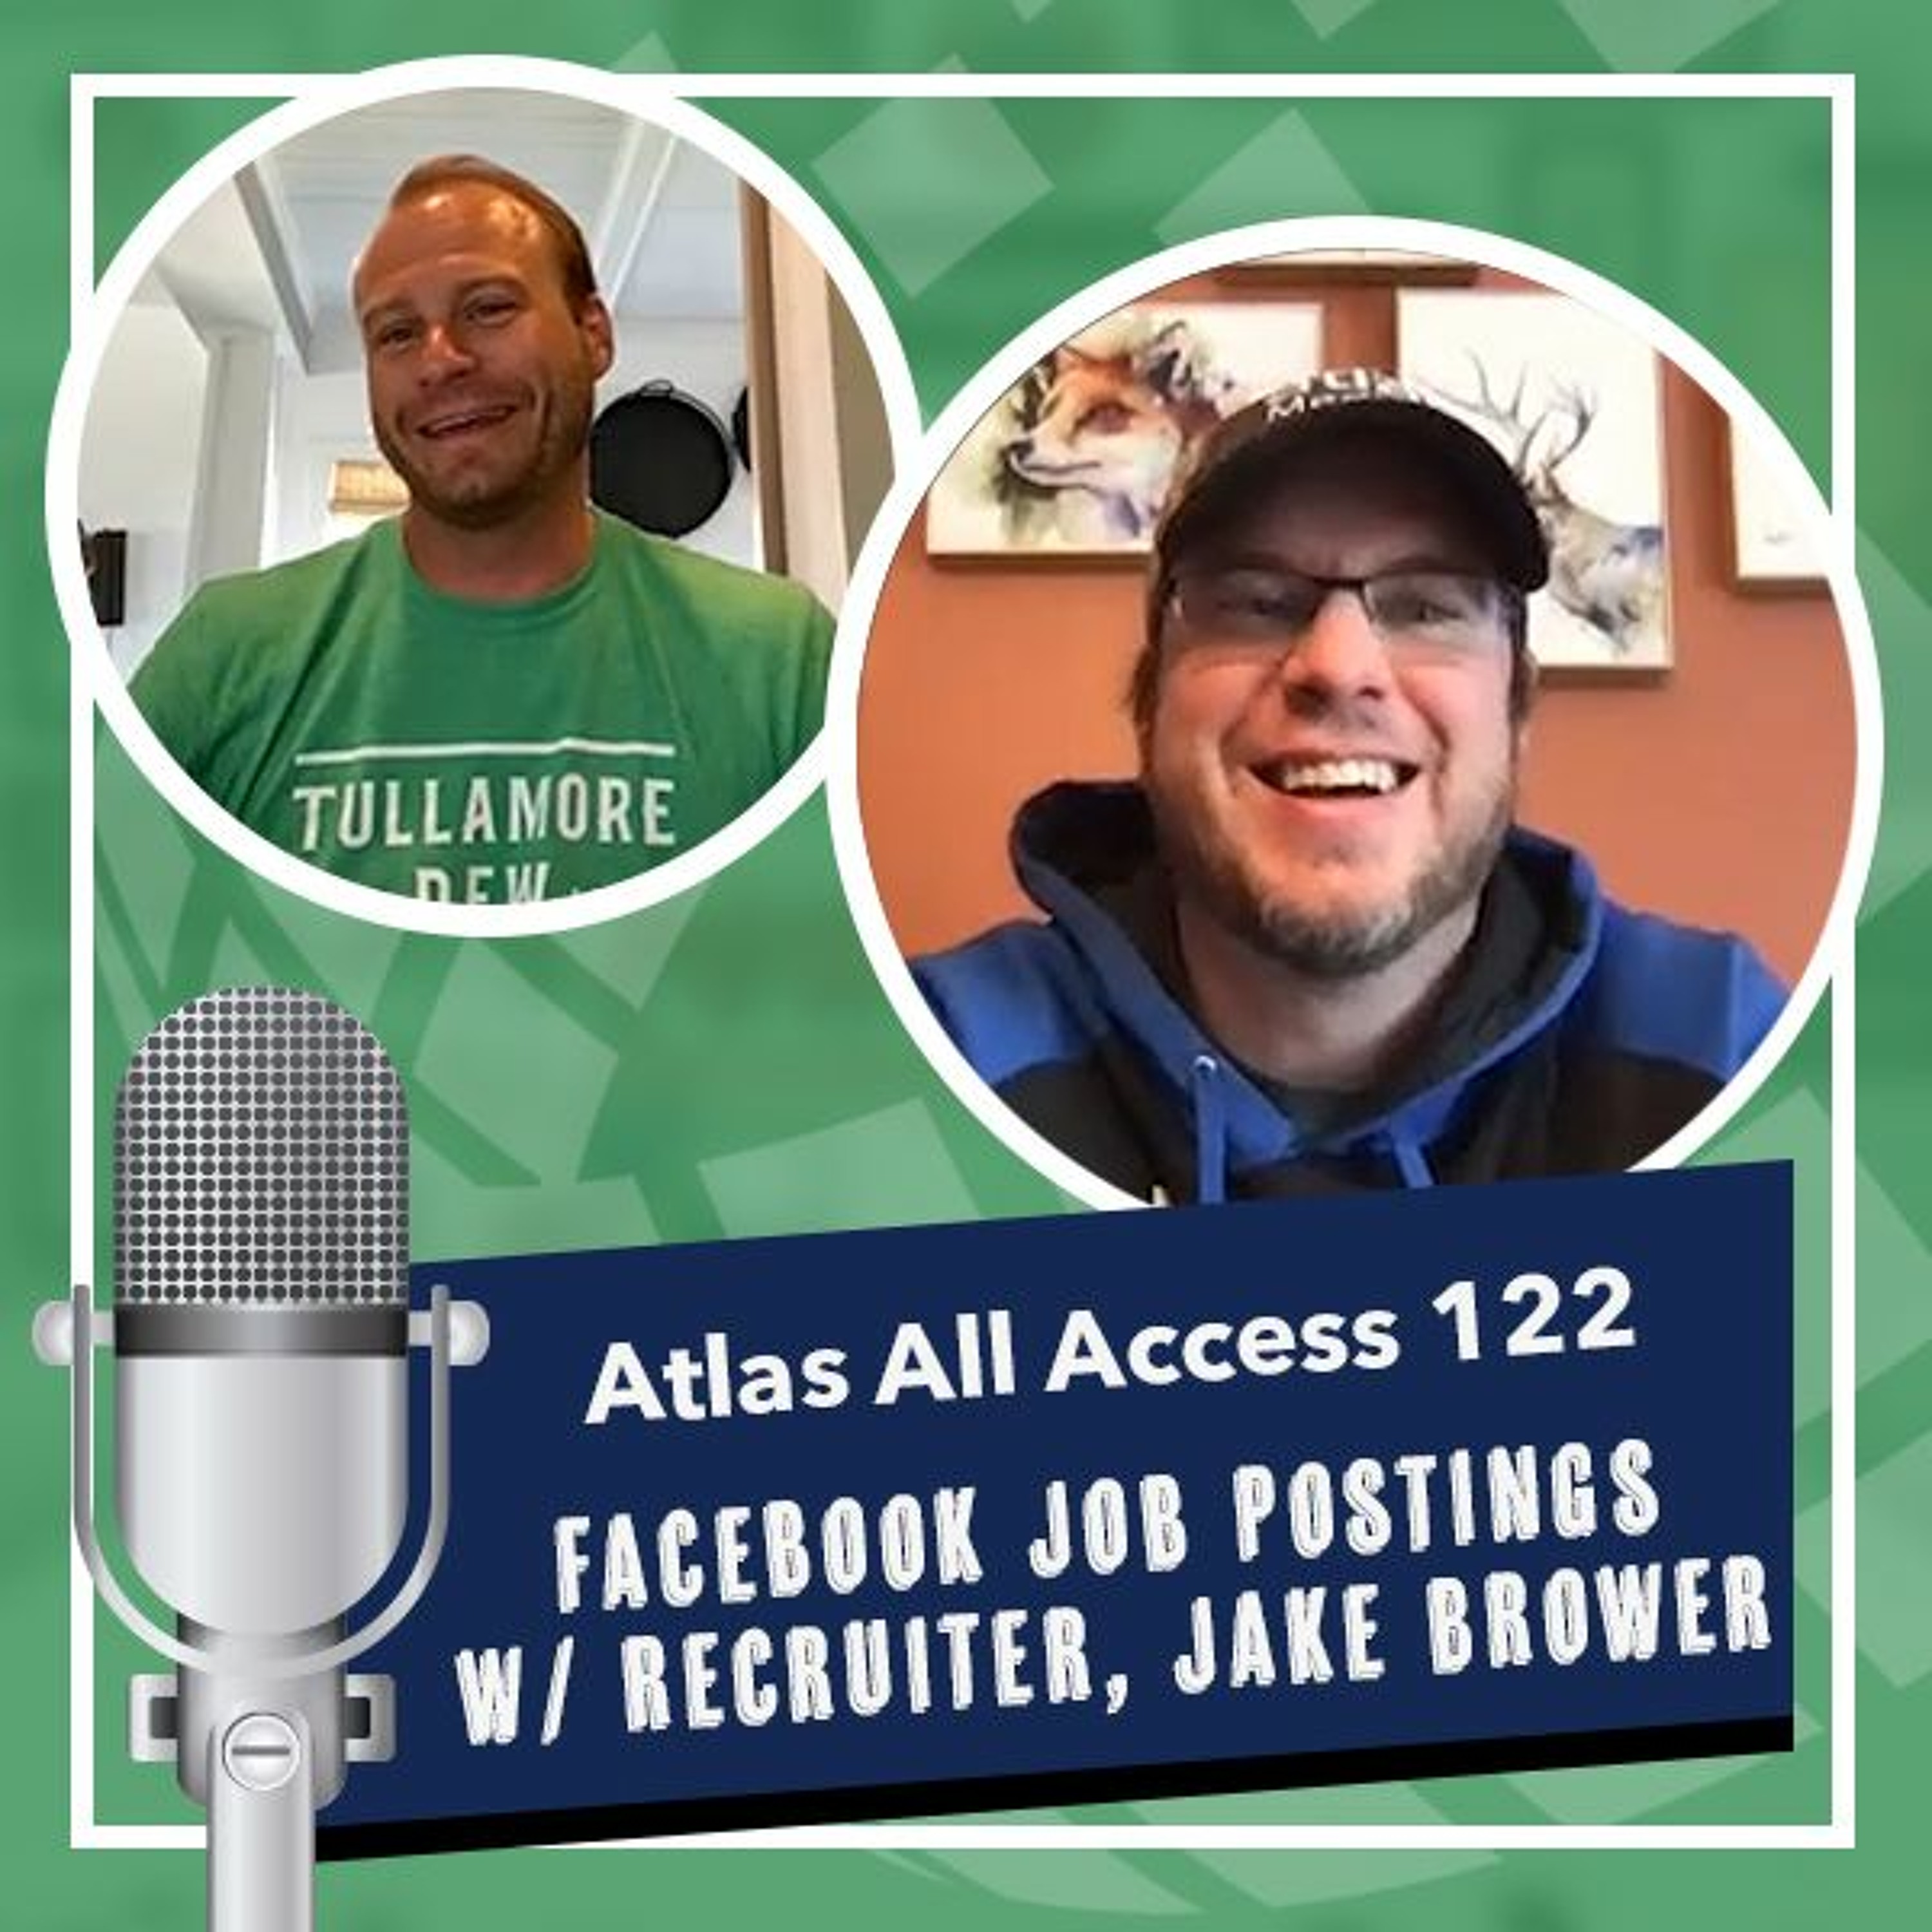 Facebook travel nurse jobs with Travel Nurse Recruiter Jake Brower - Atlas All Access 122